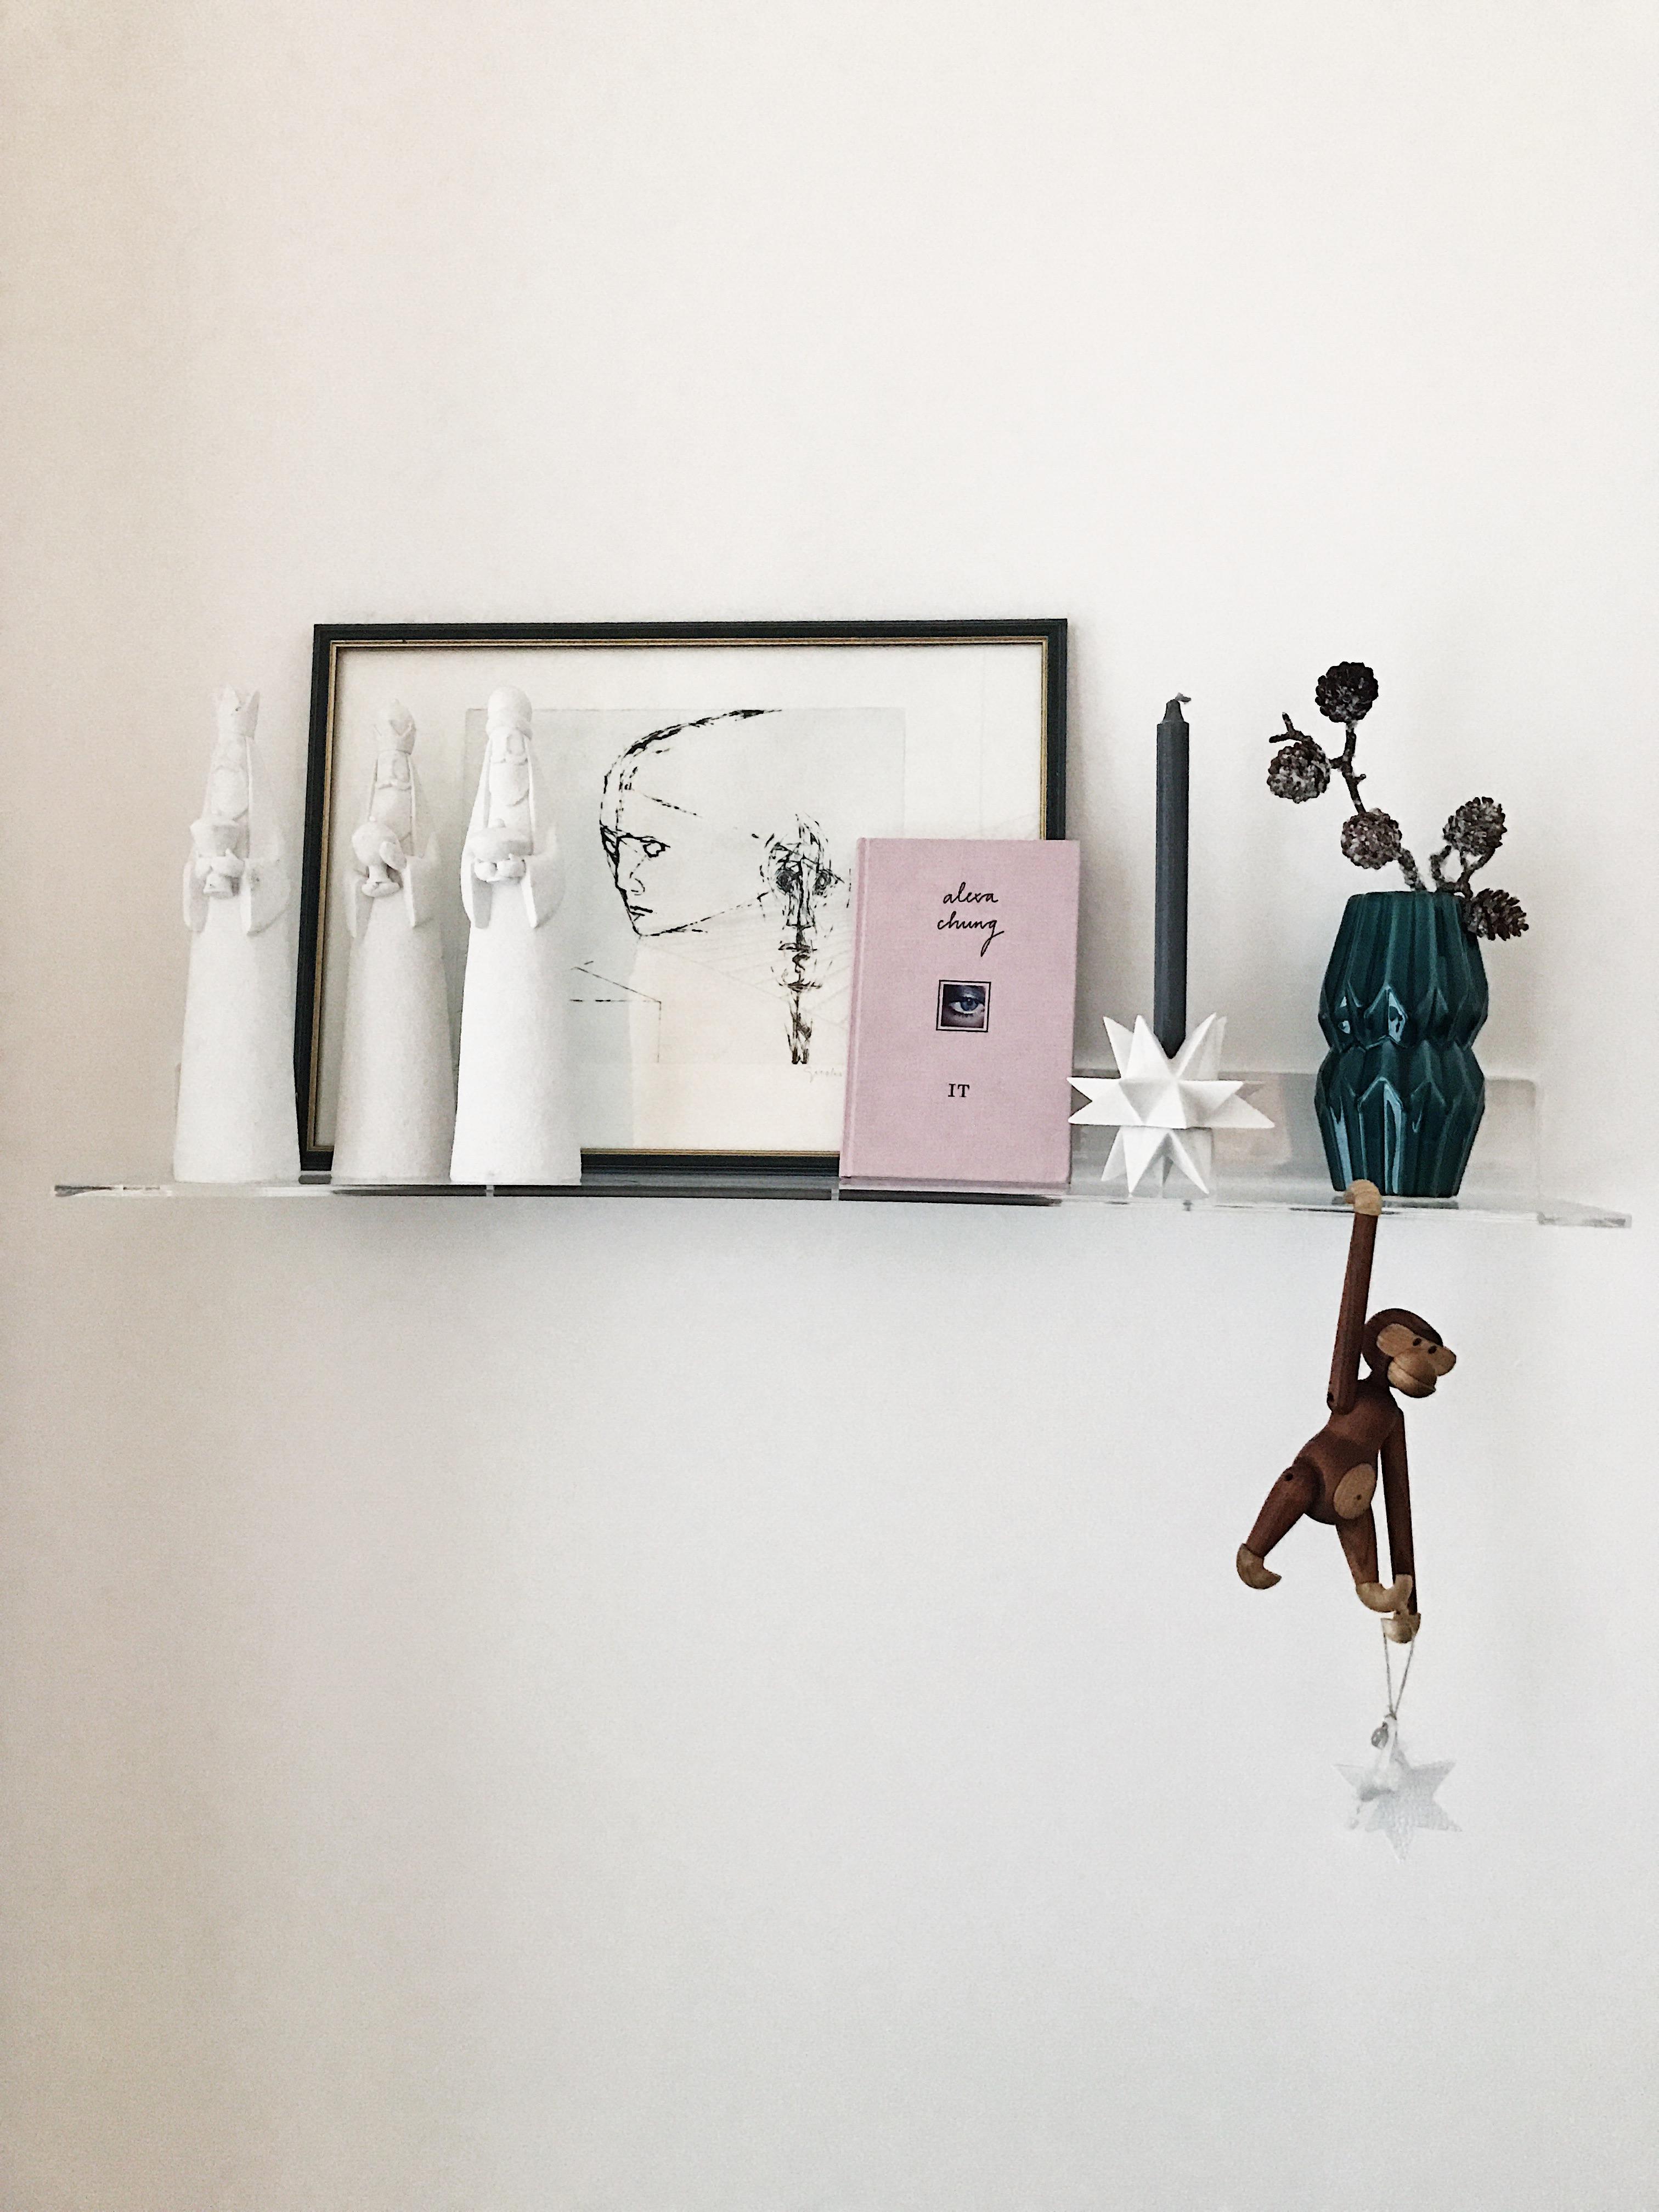 #xmas#acrylbord#decor#kaybojesen#dreikönige#home#whiteliving#wohnzimmer#regal